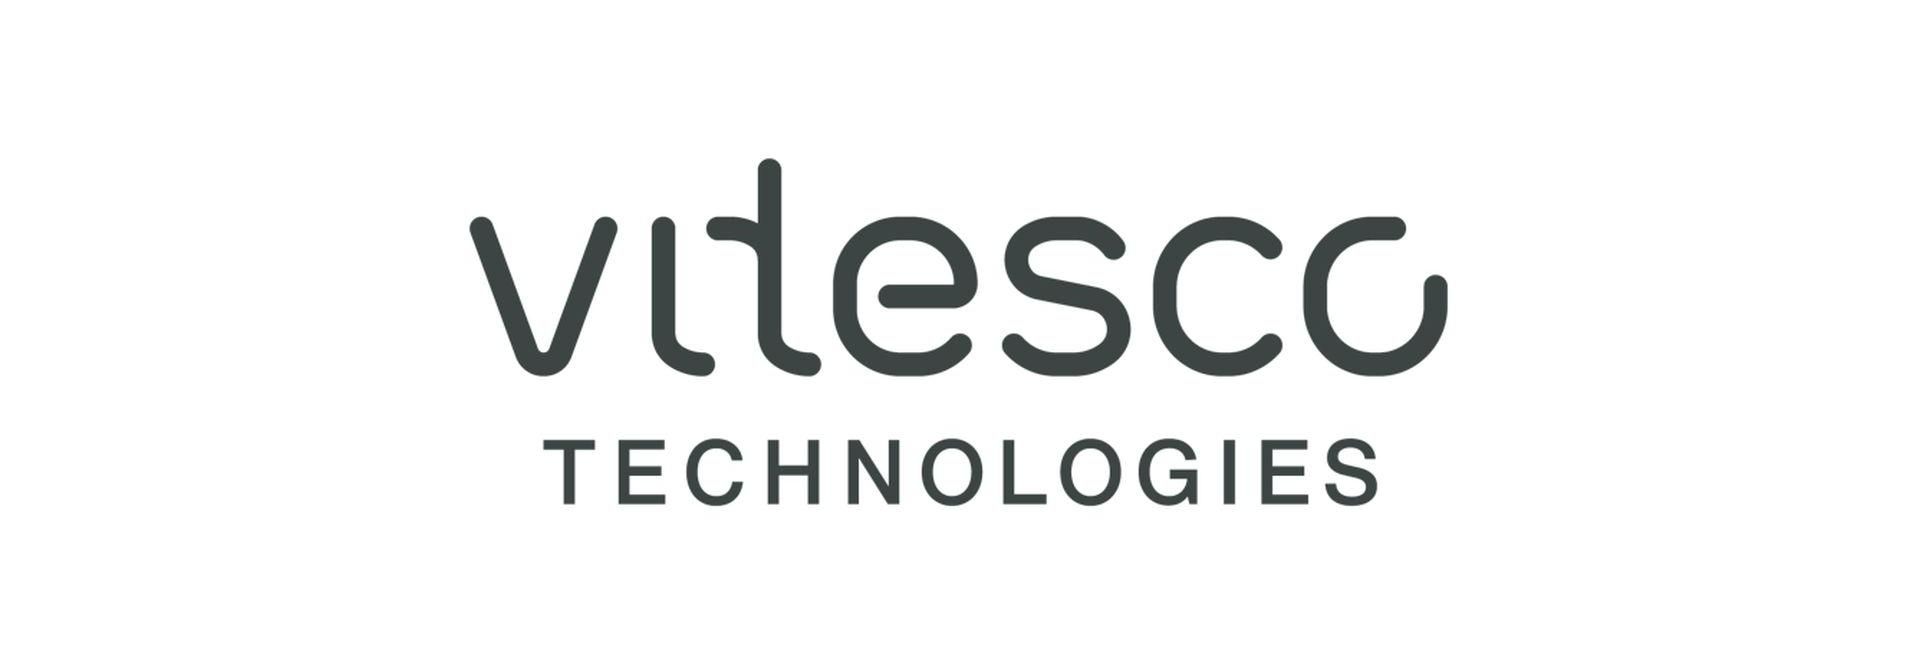 Vitesco Technologies strengthens its manufacturing activity in Debrecen - VIDEO REPORT